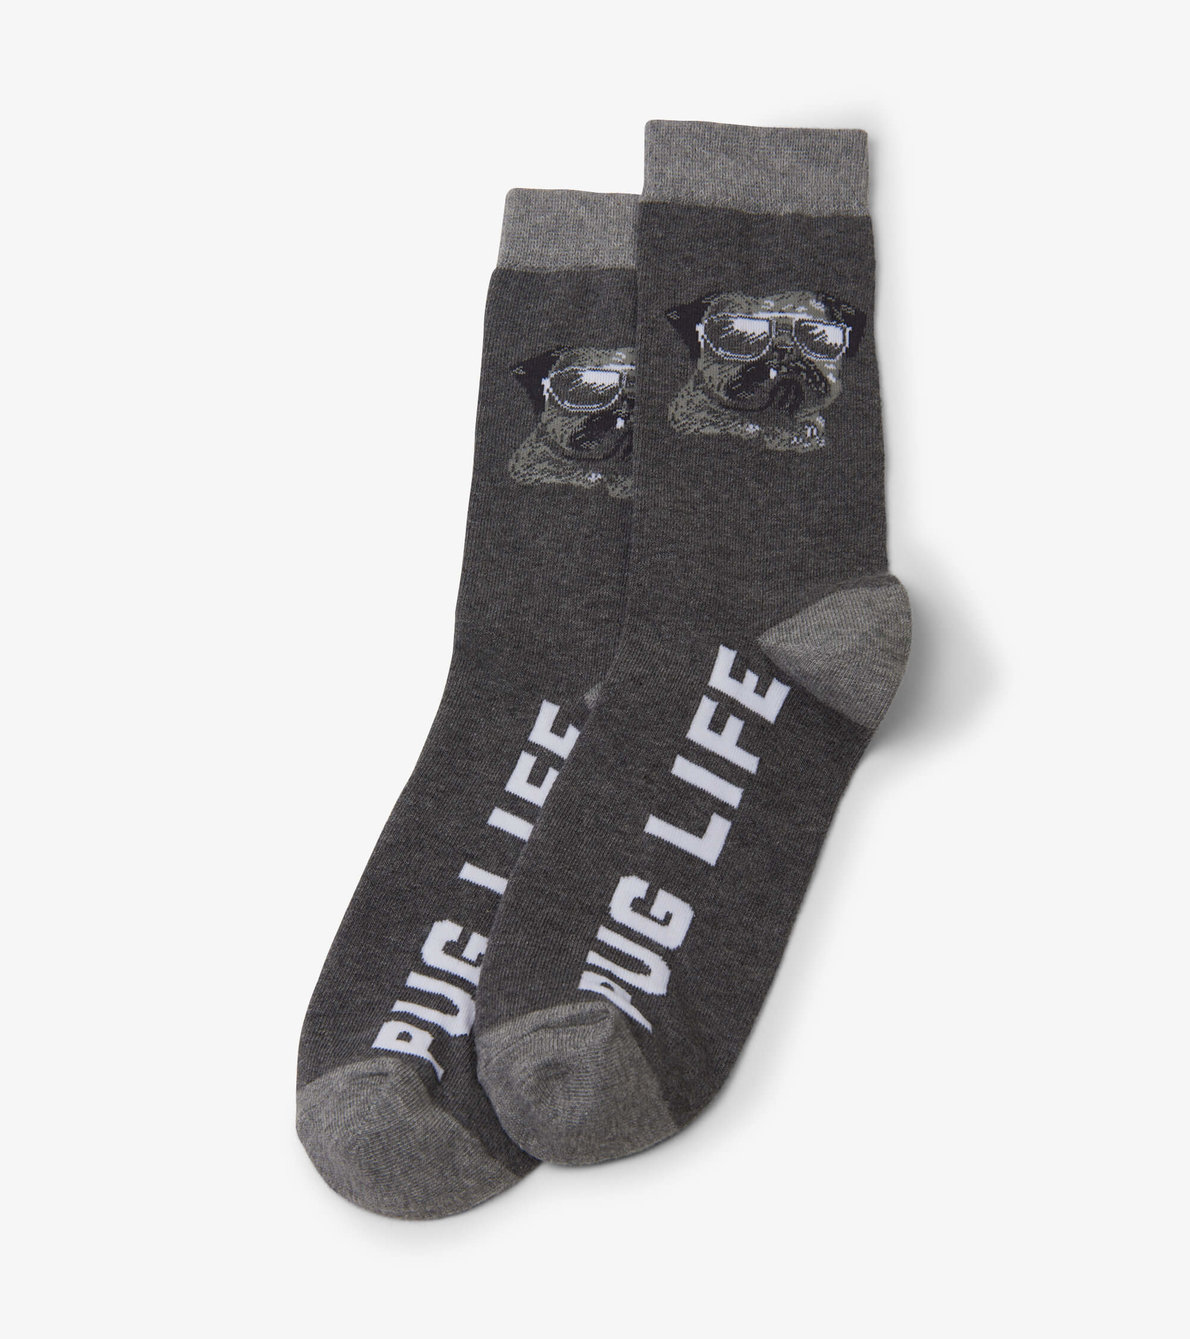 View larger image of Pug Life Men's Crew Socks